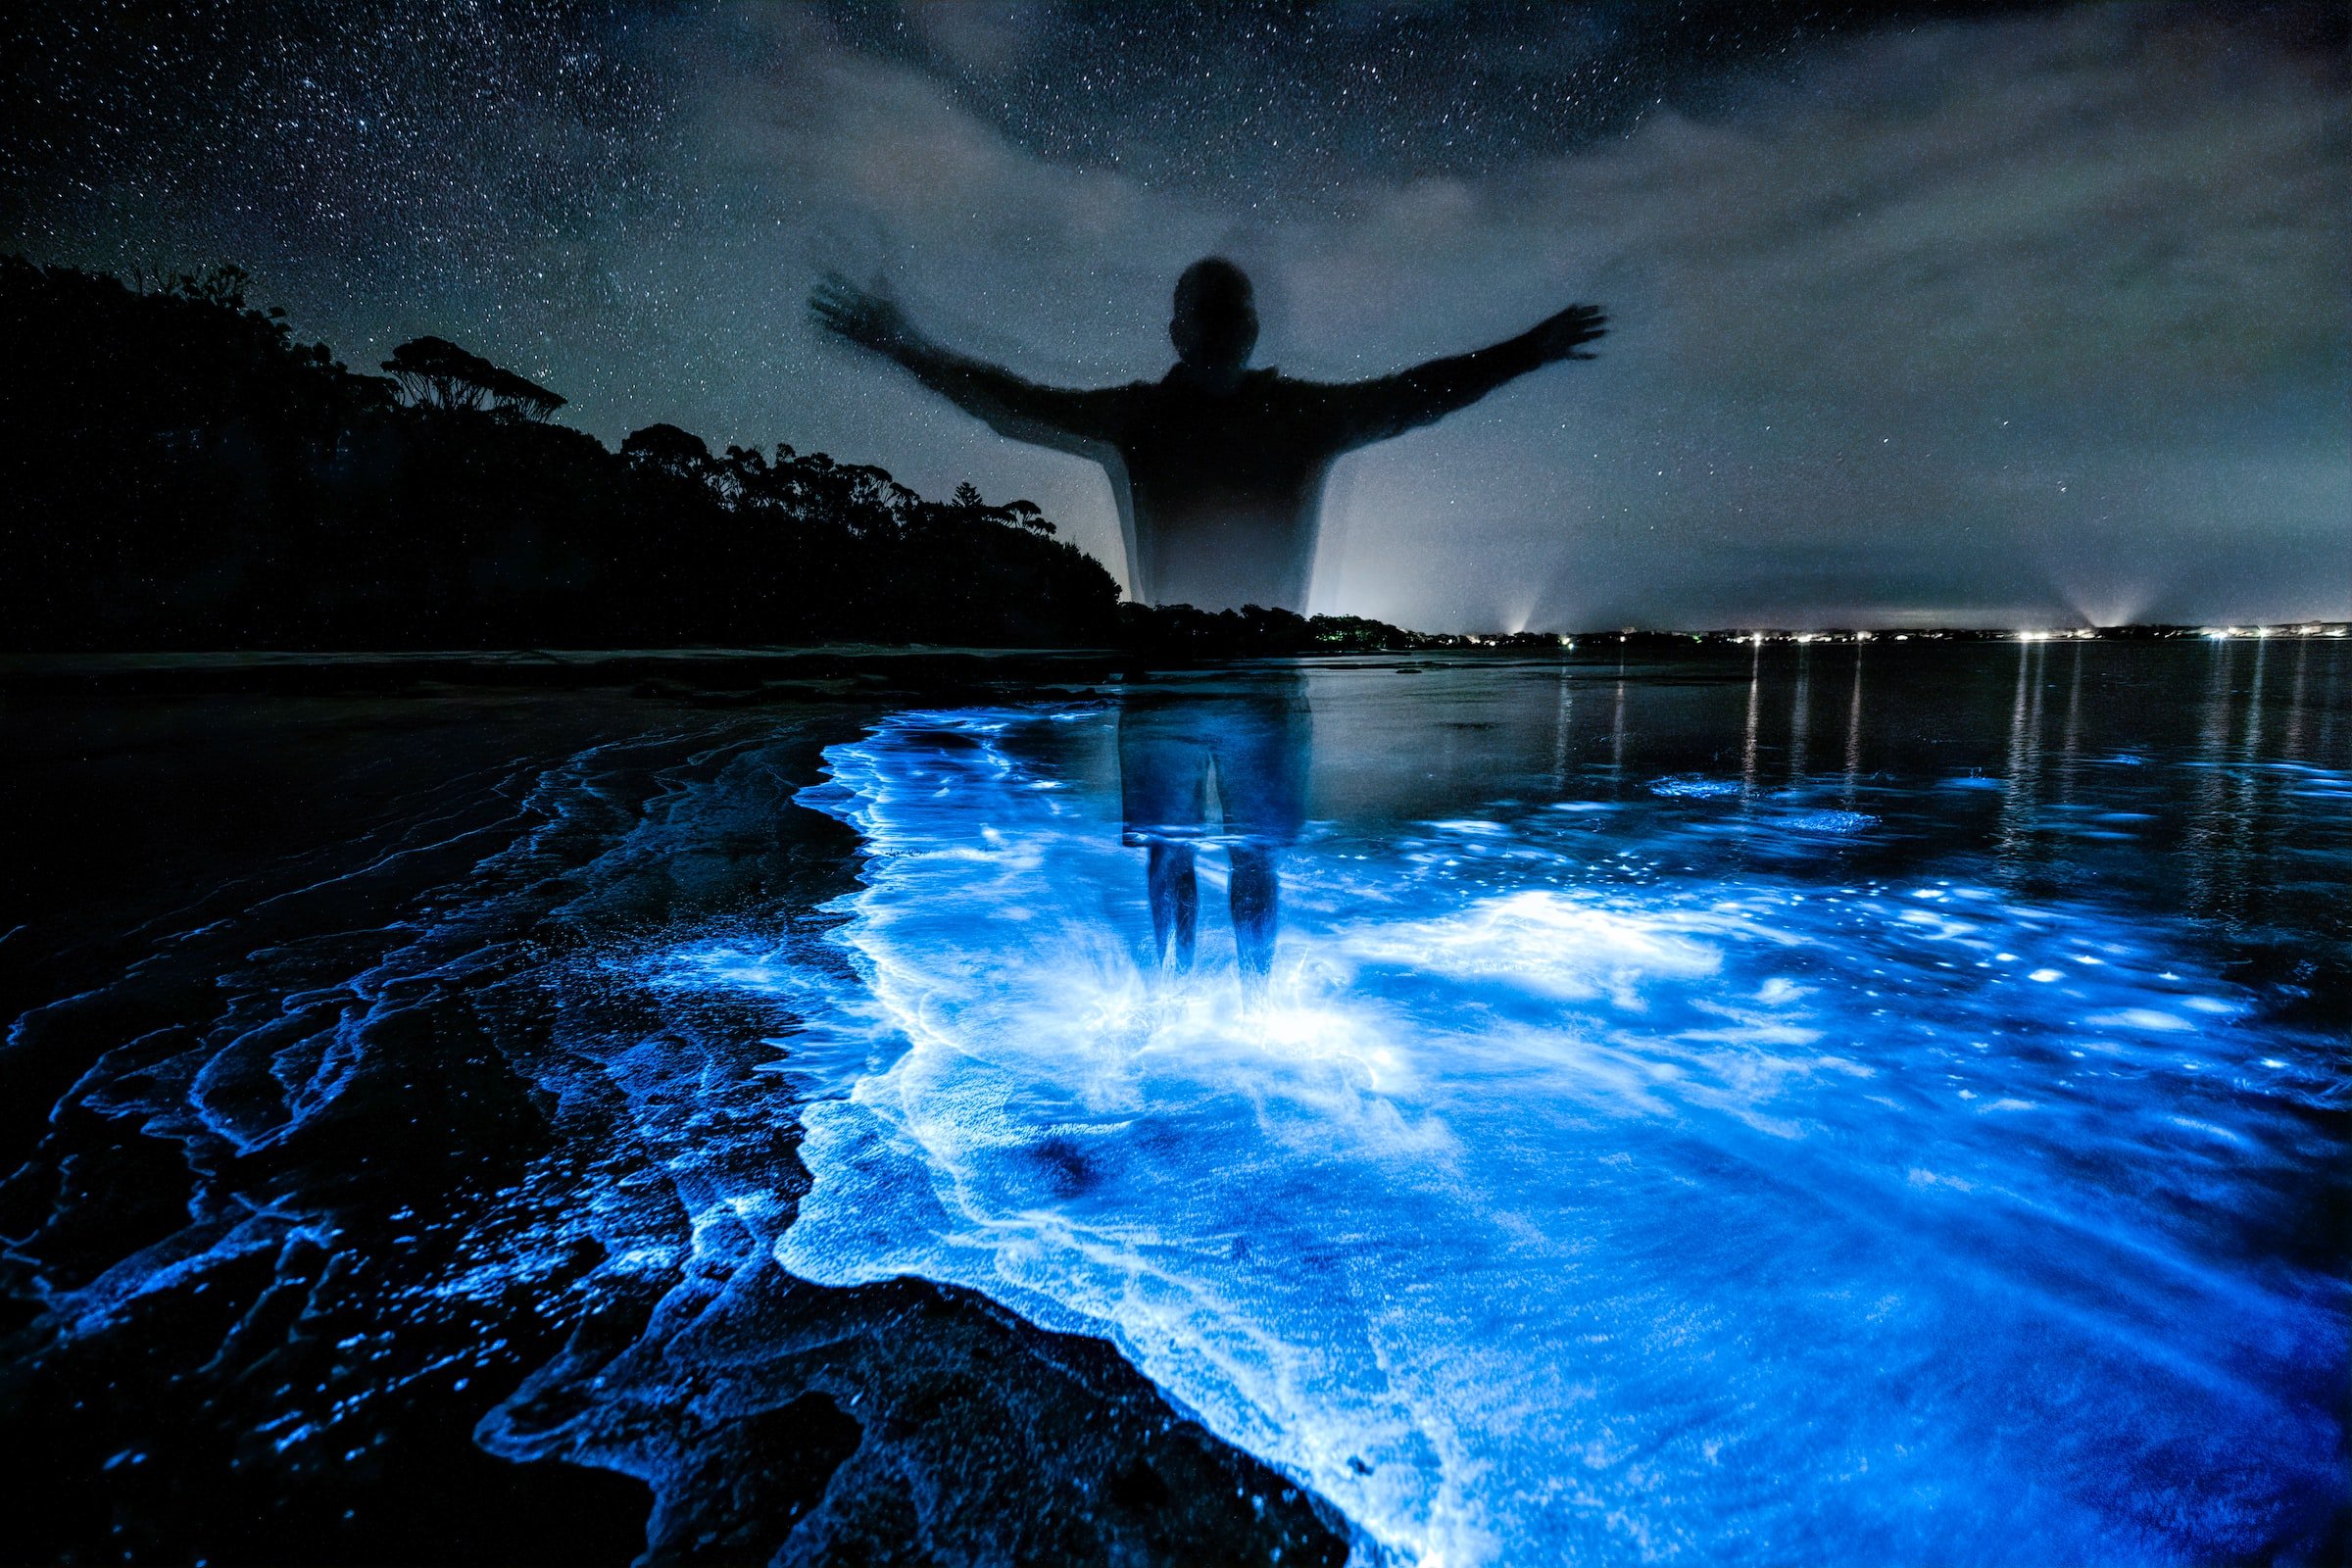 Bioluminescent Plankton, Phi Phi Islands - fascinating phenomenon